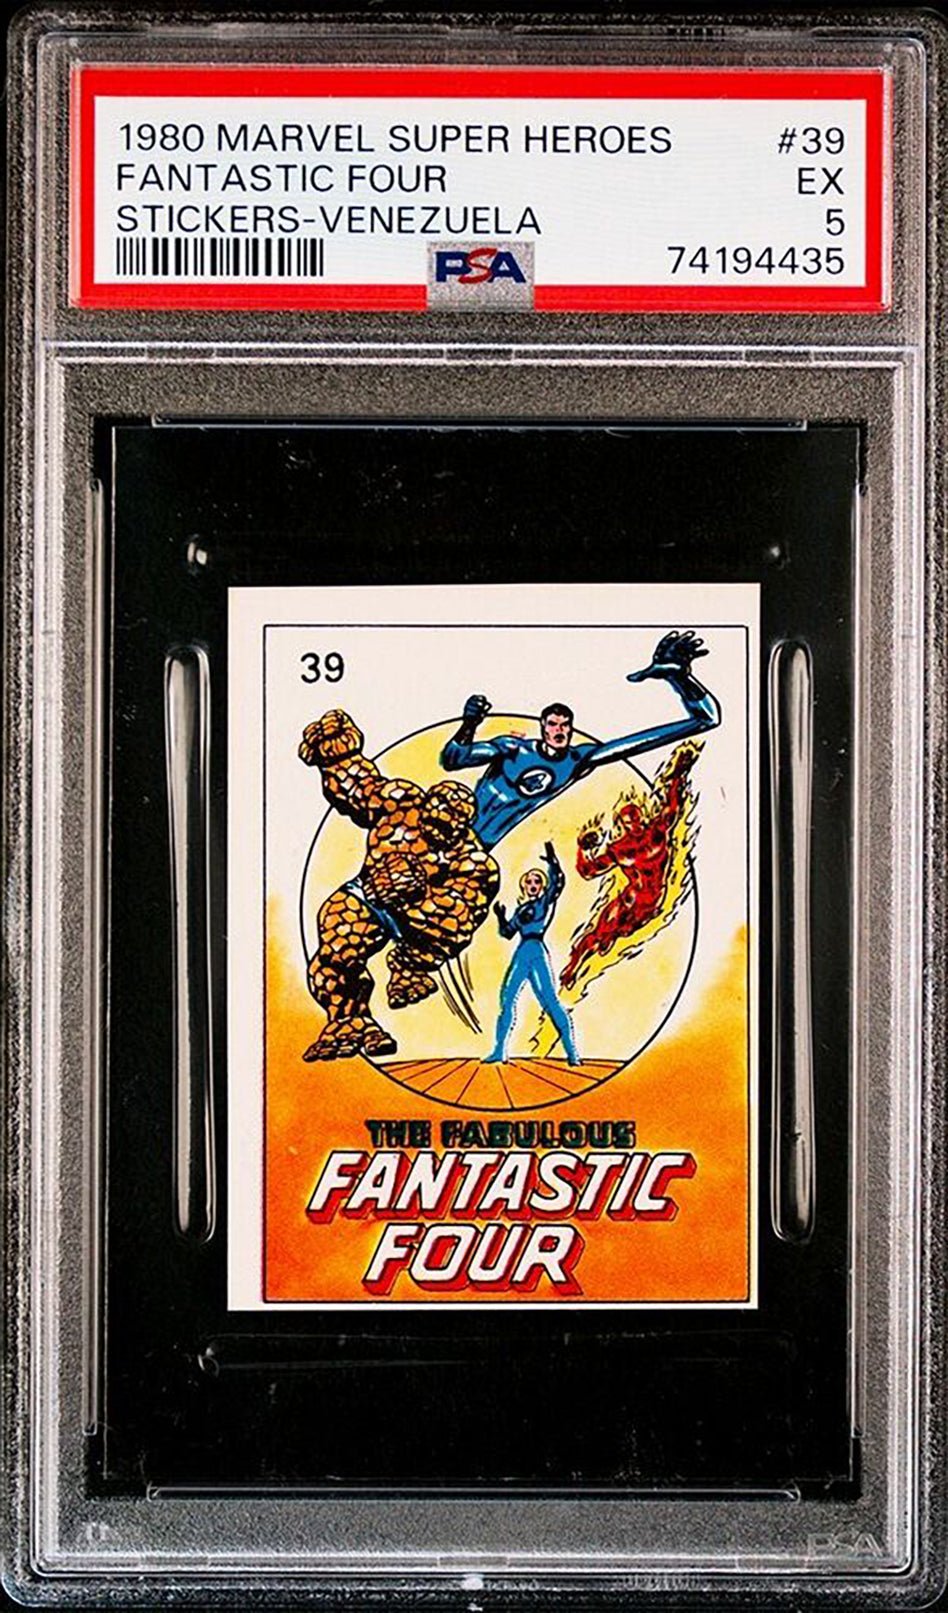 FANTASTIC FOUR PSA 5 1980 Marvel Super Heroes Stickers-Venezuela #39 C2 Marvel Graded Cards Sticker - Hobby Gems